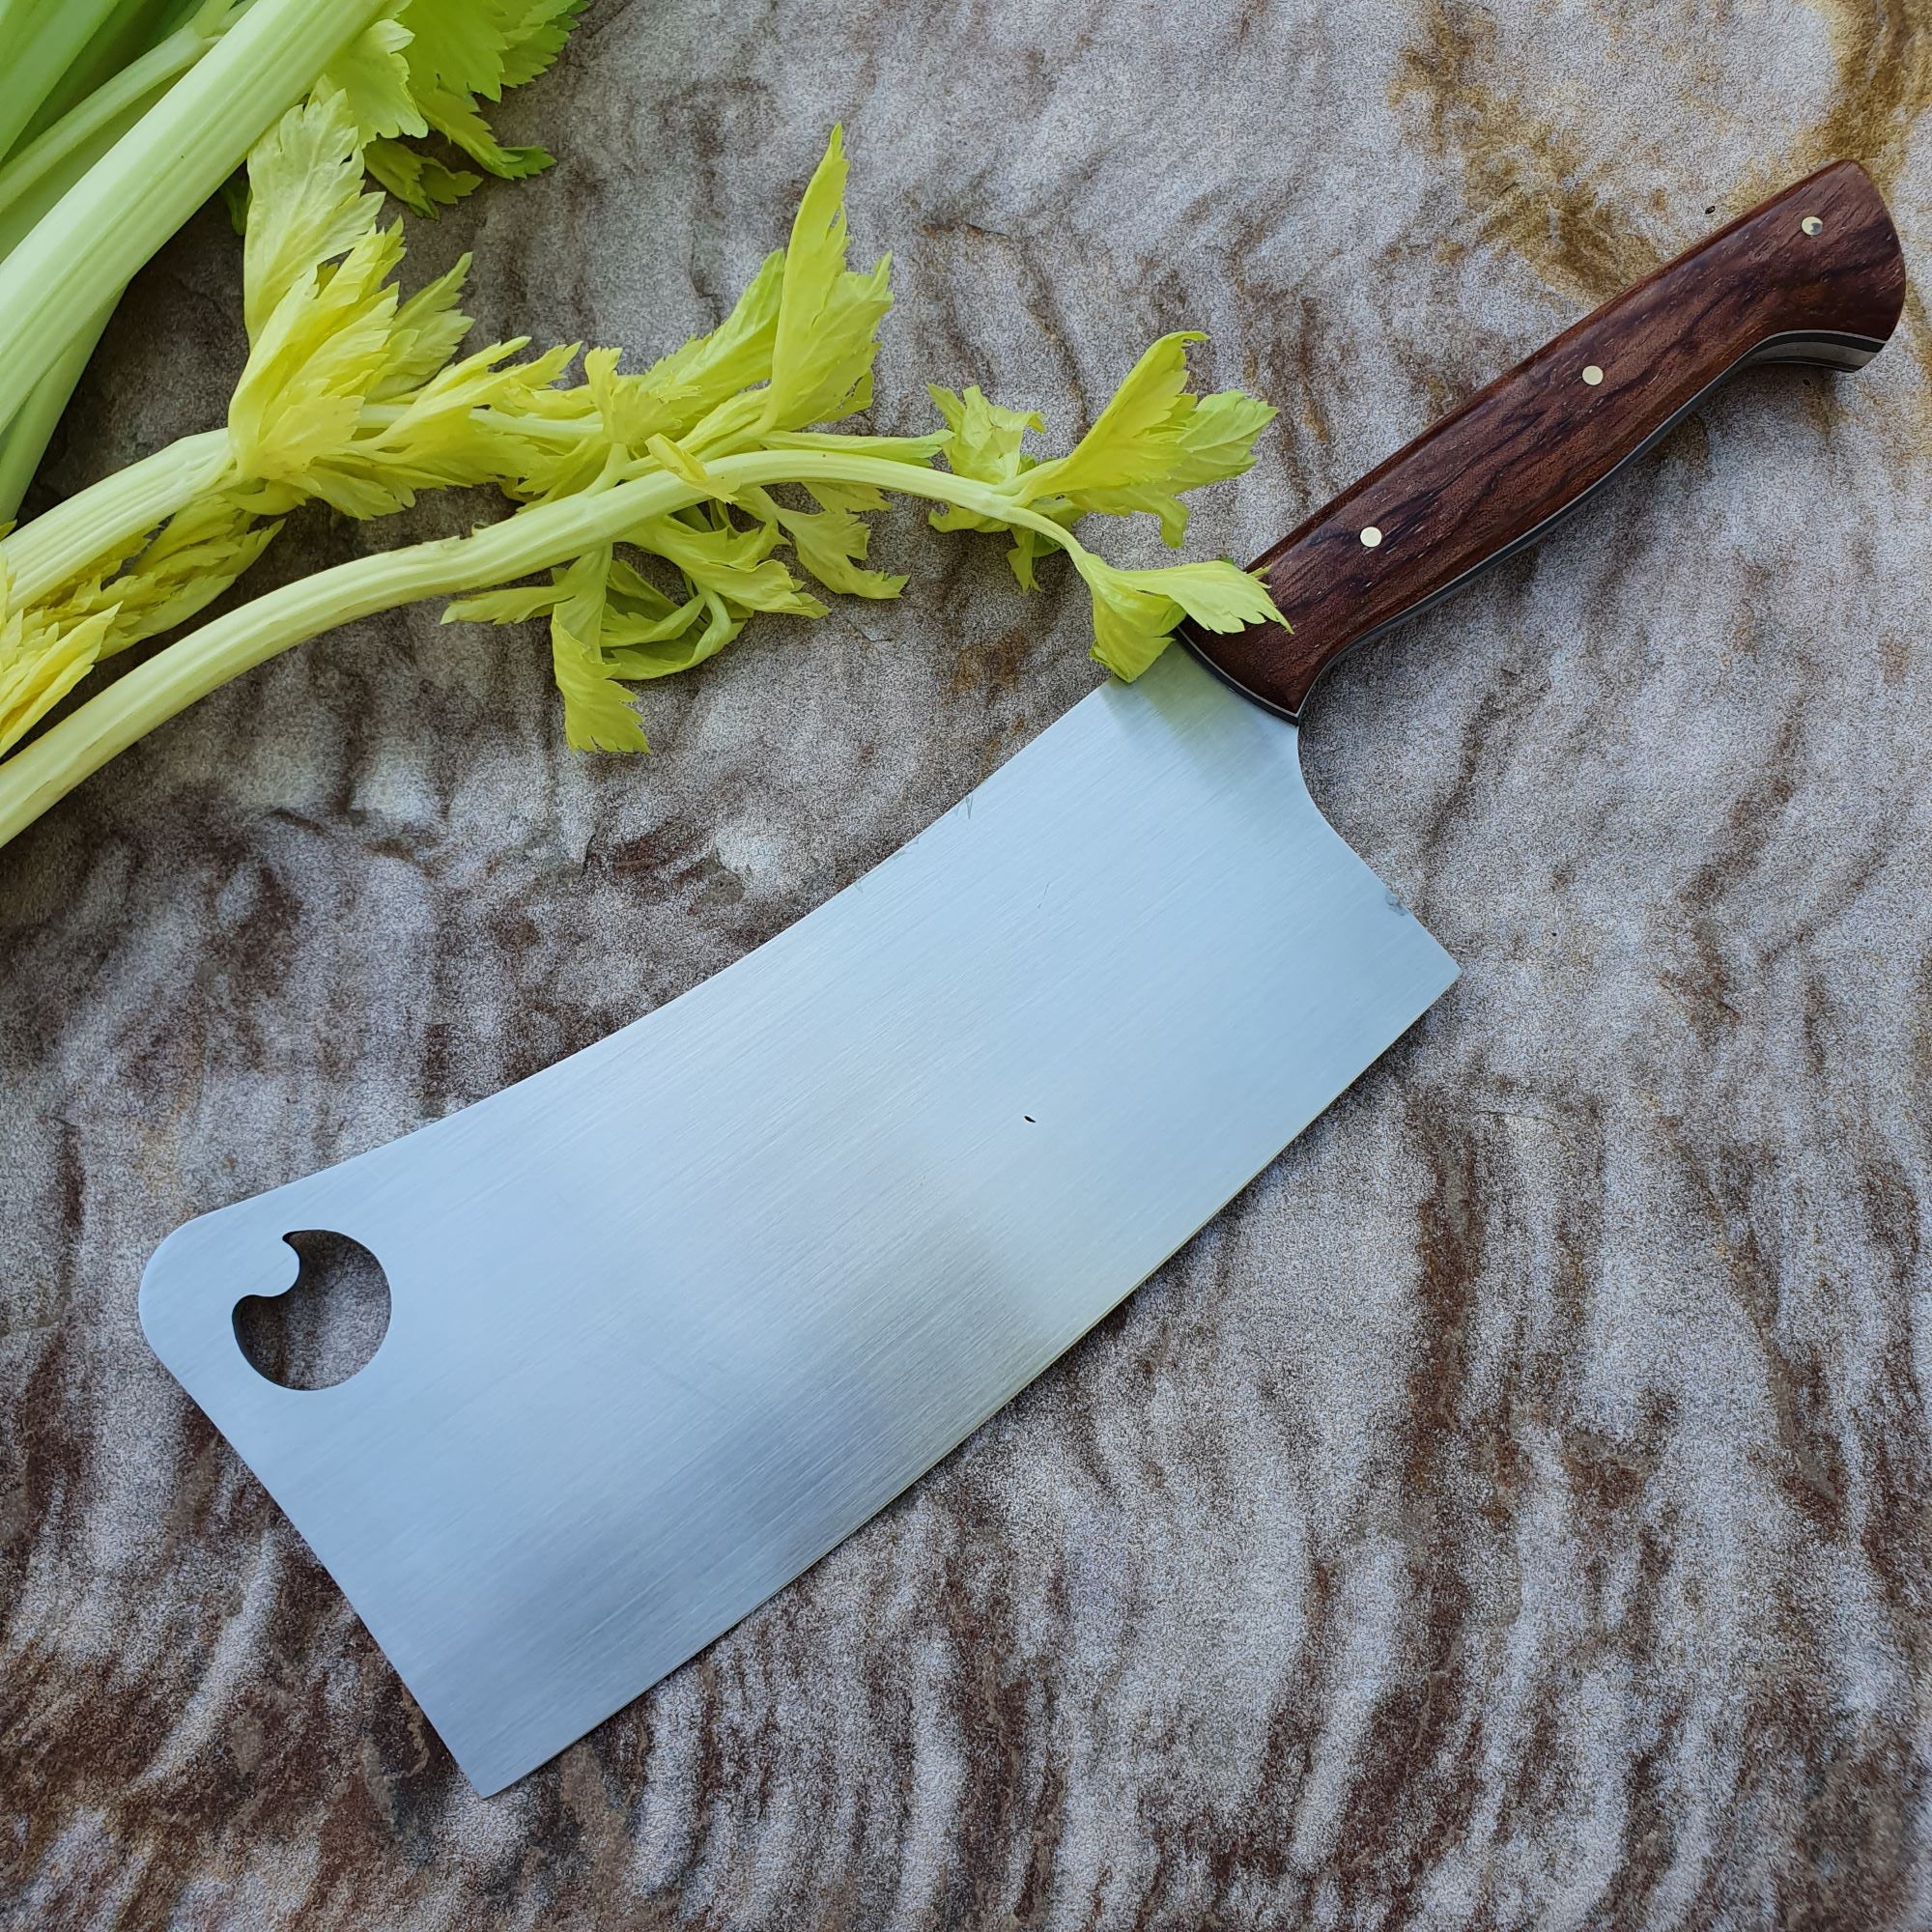 NORA Knife # 1553 "Buffalo Cleaver"